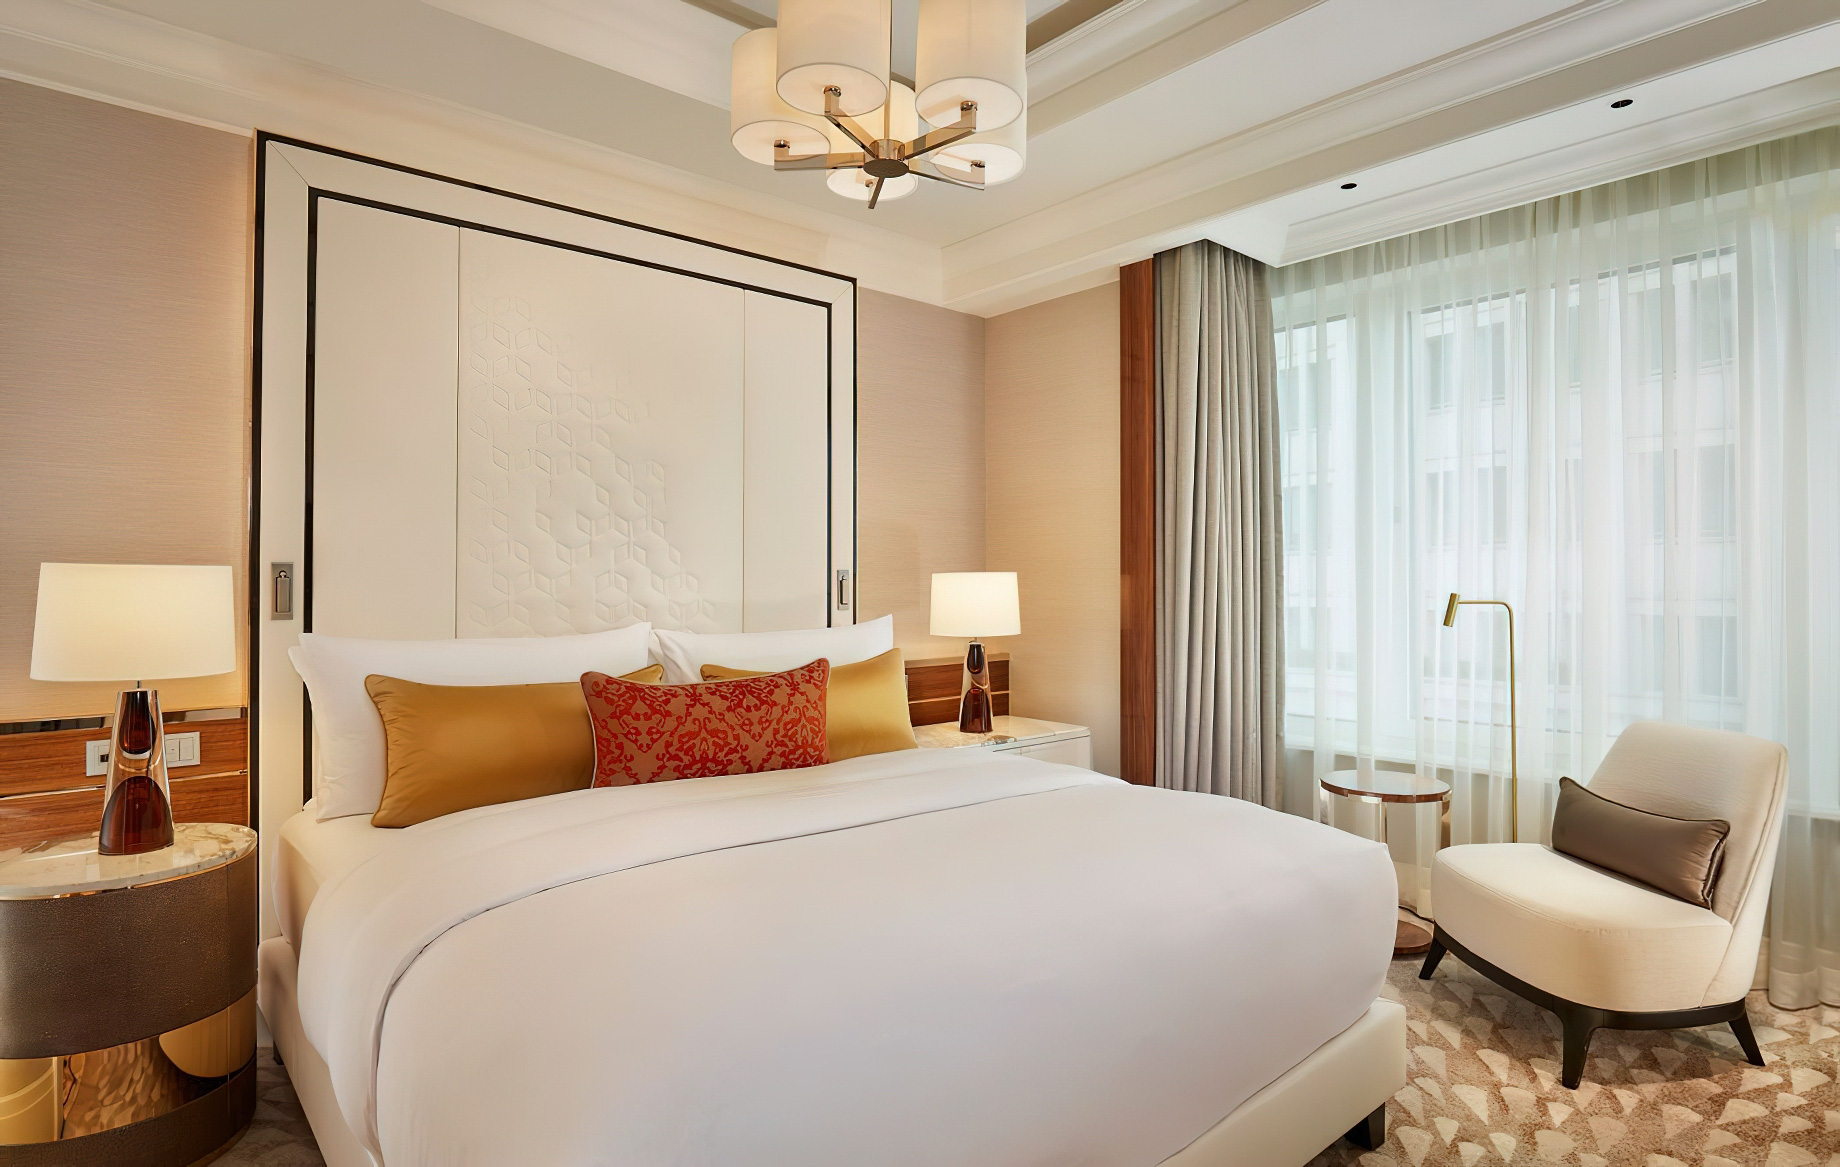 The Ritz-Carlton, Berlin Hotel – Berlin, Germany – The Ritz-Carlton Suite Bed